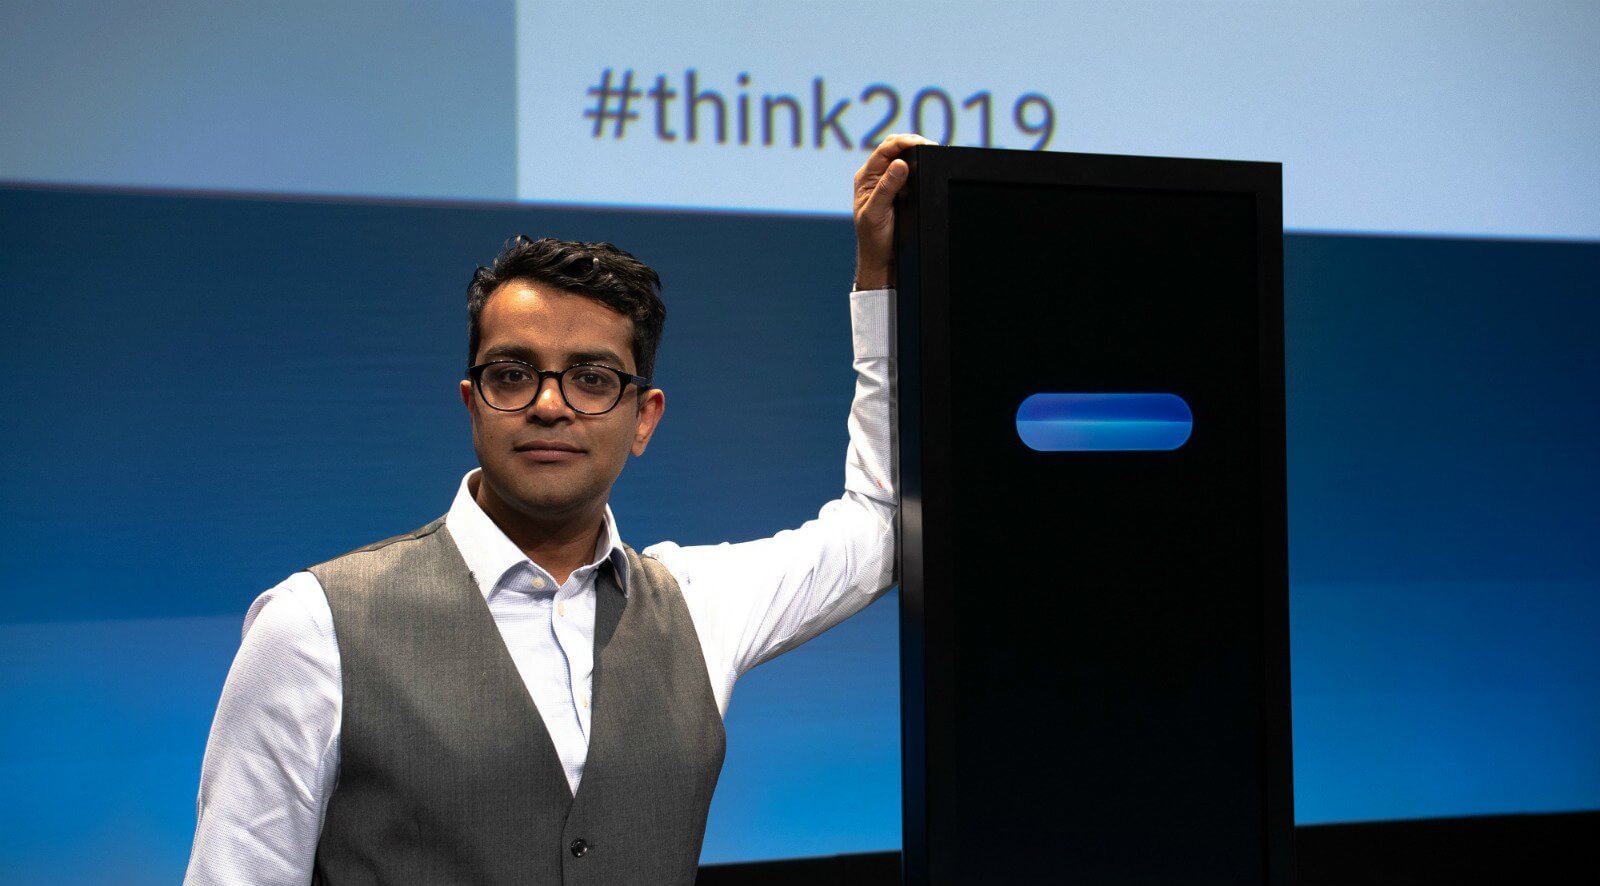 Human champion beats IBM's AI in debating challenge